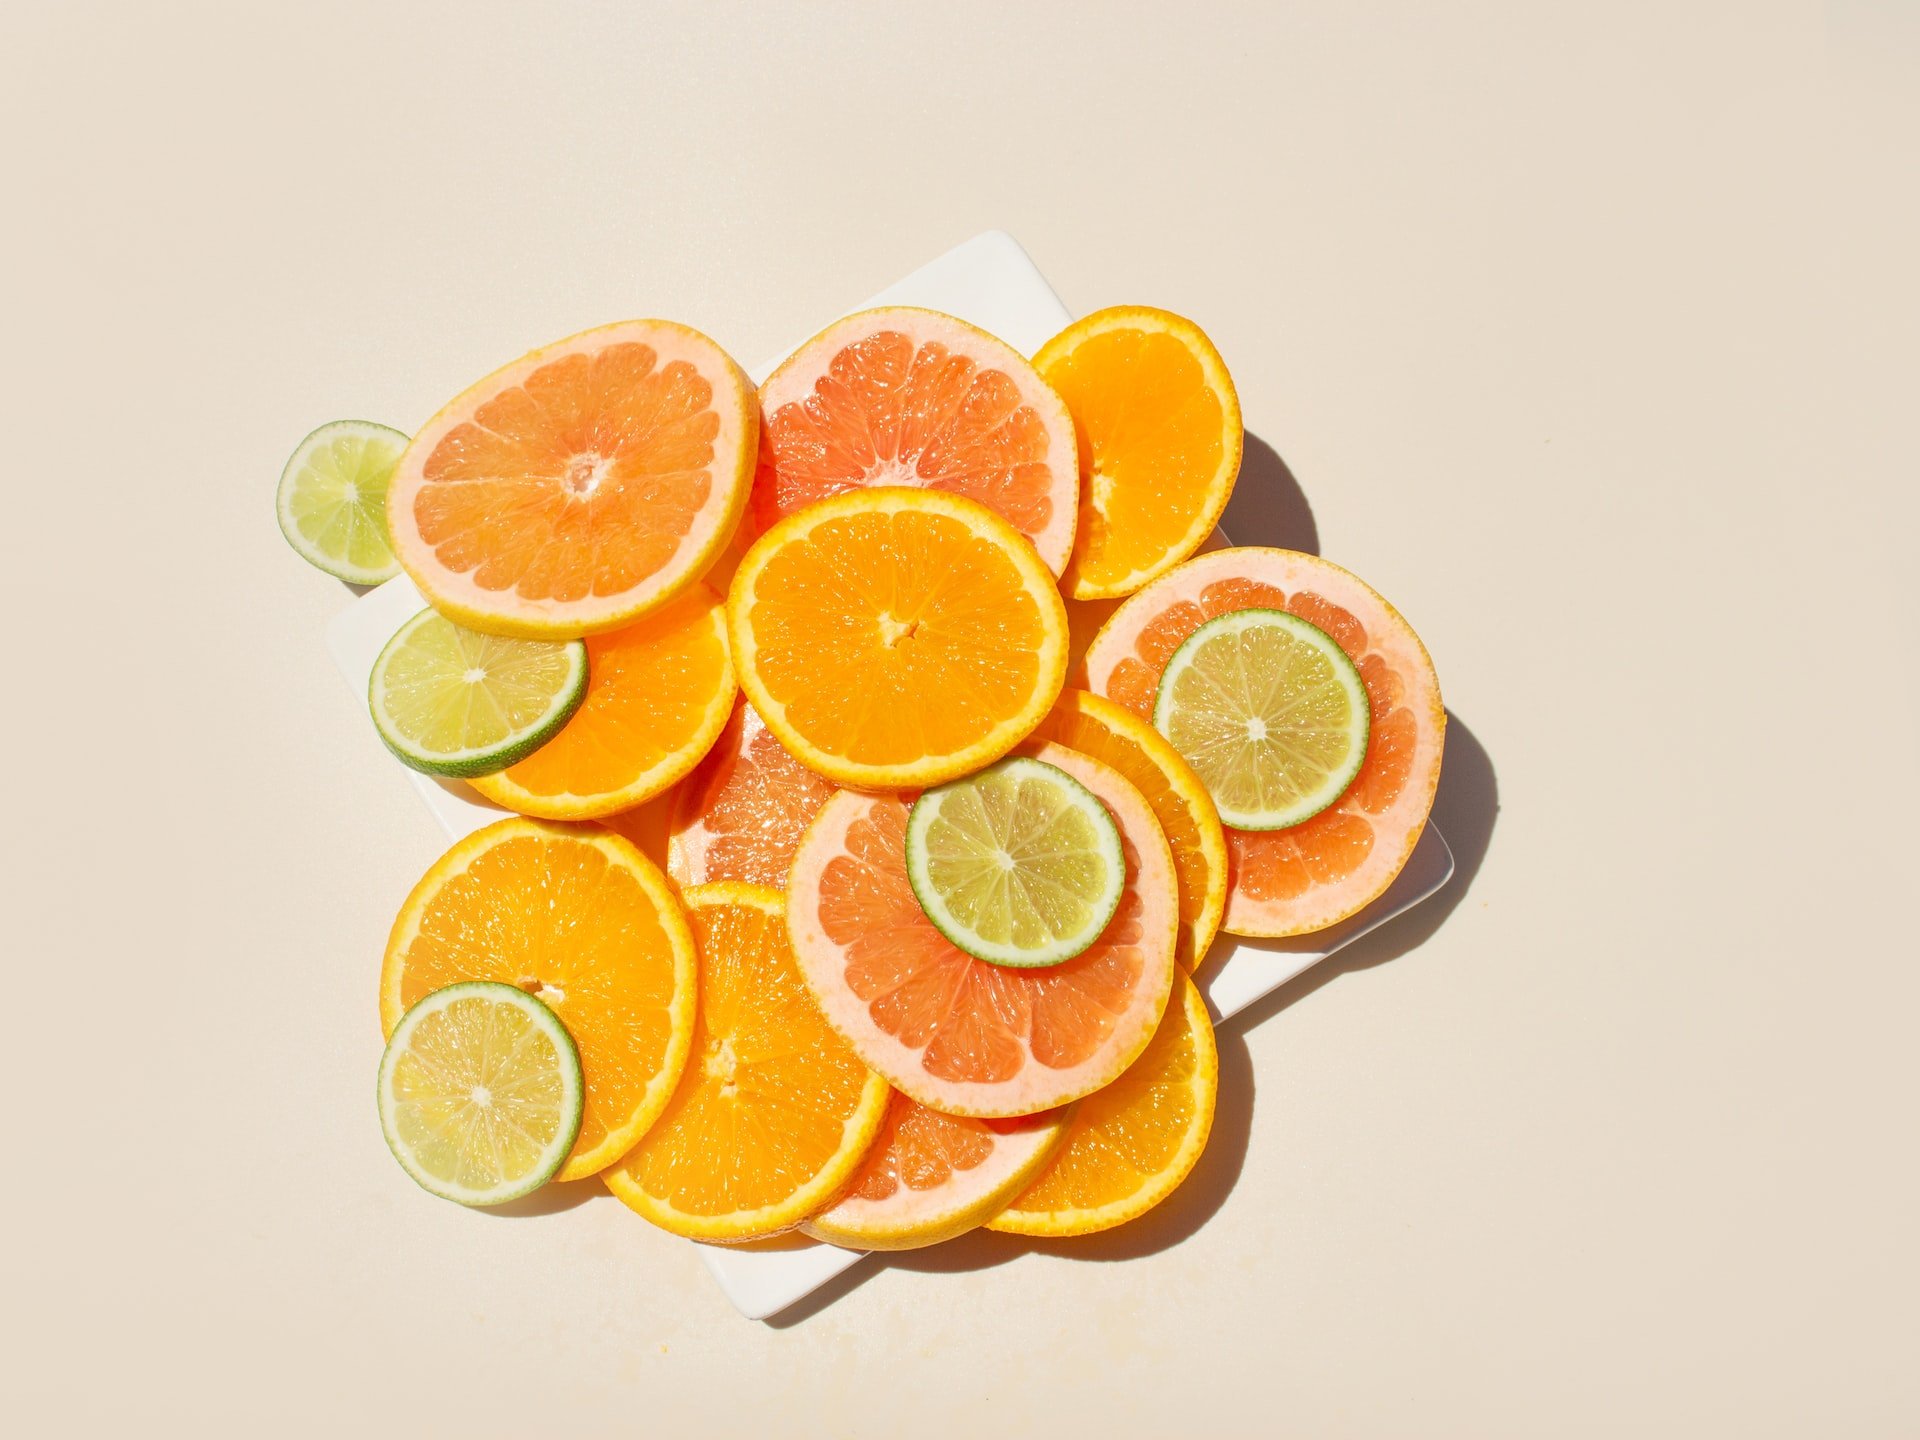 lemon lime orange grapefruit vicky-nguyen-fsj6mUsB8TY-unsplash.jpeg